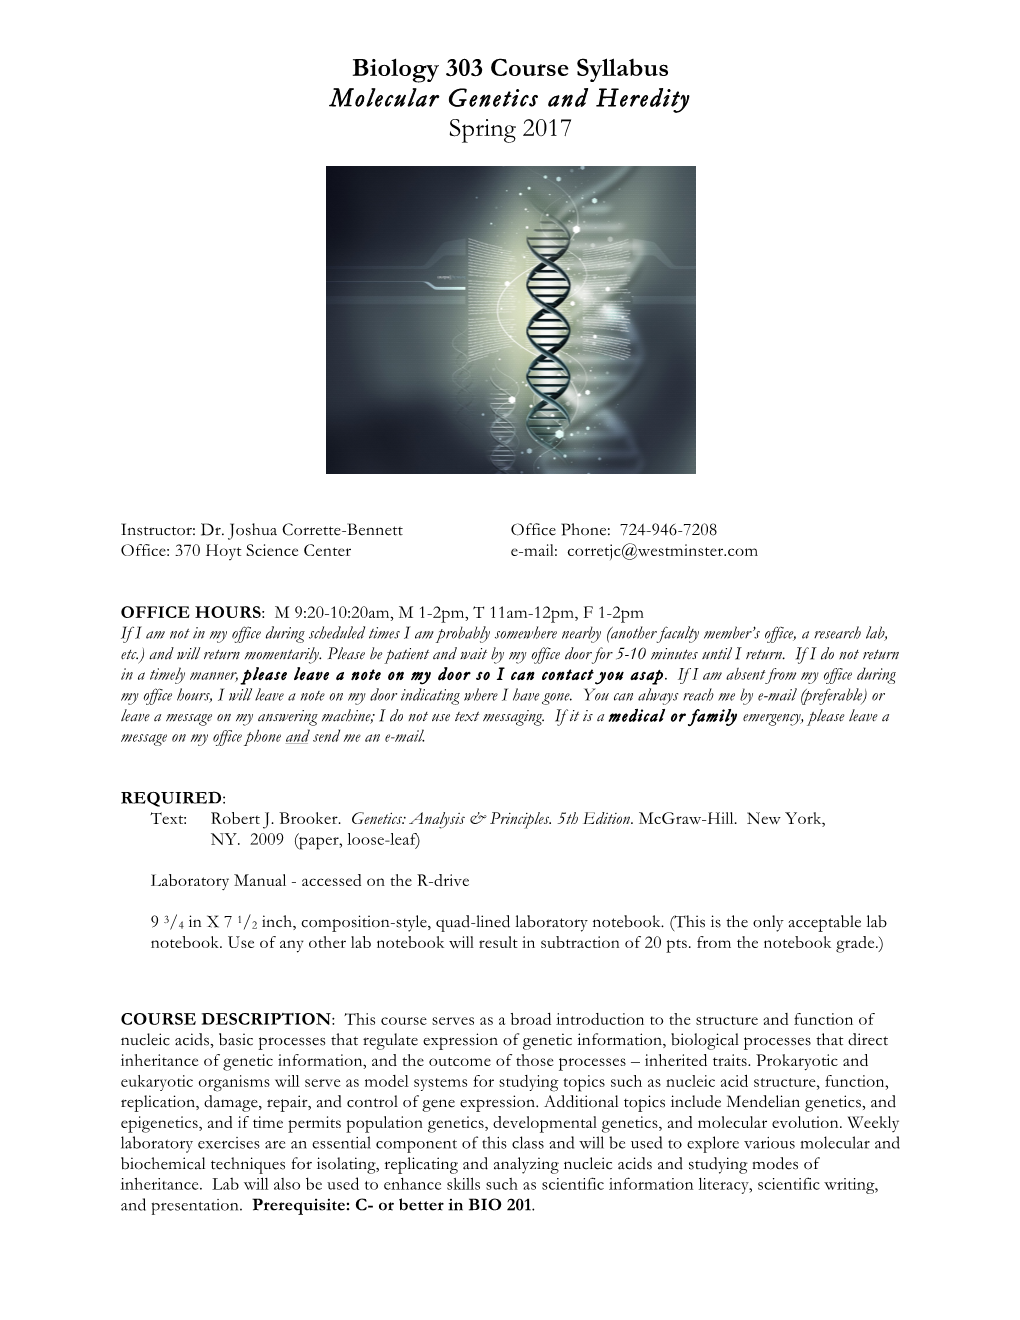 Biology 303 Course Syllabus Molecular Genetics and Heredity Spring 2017